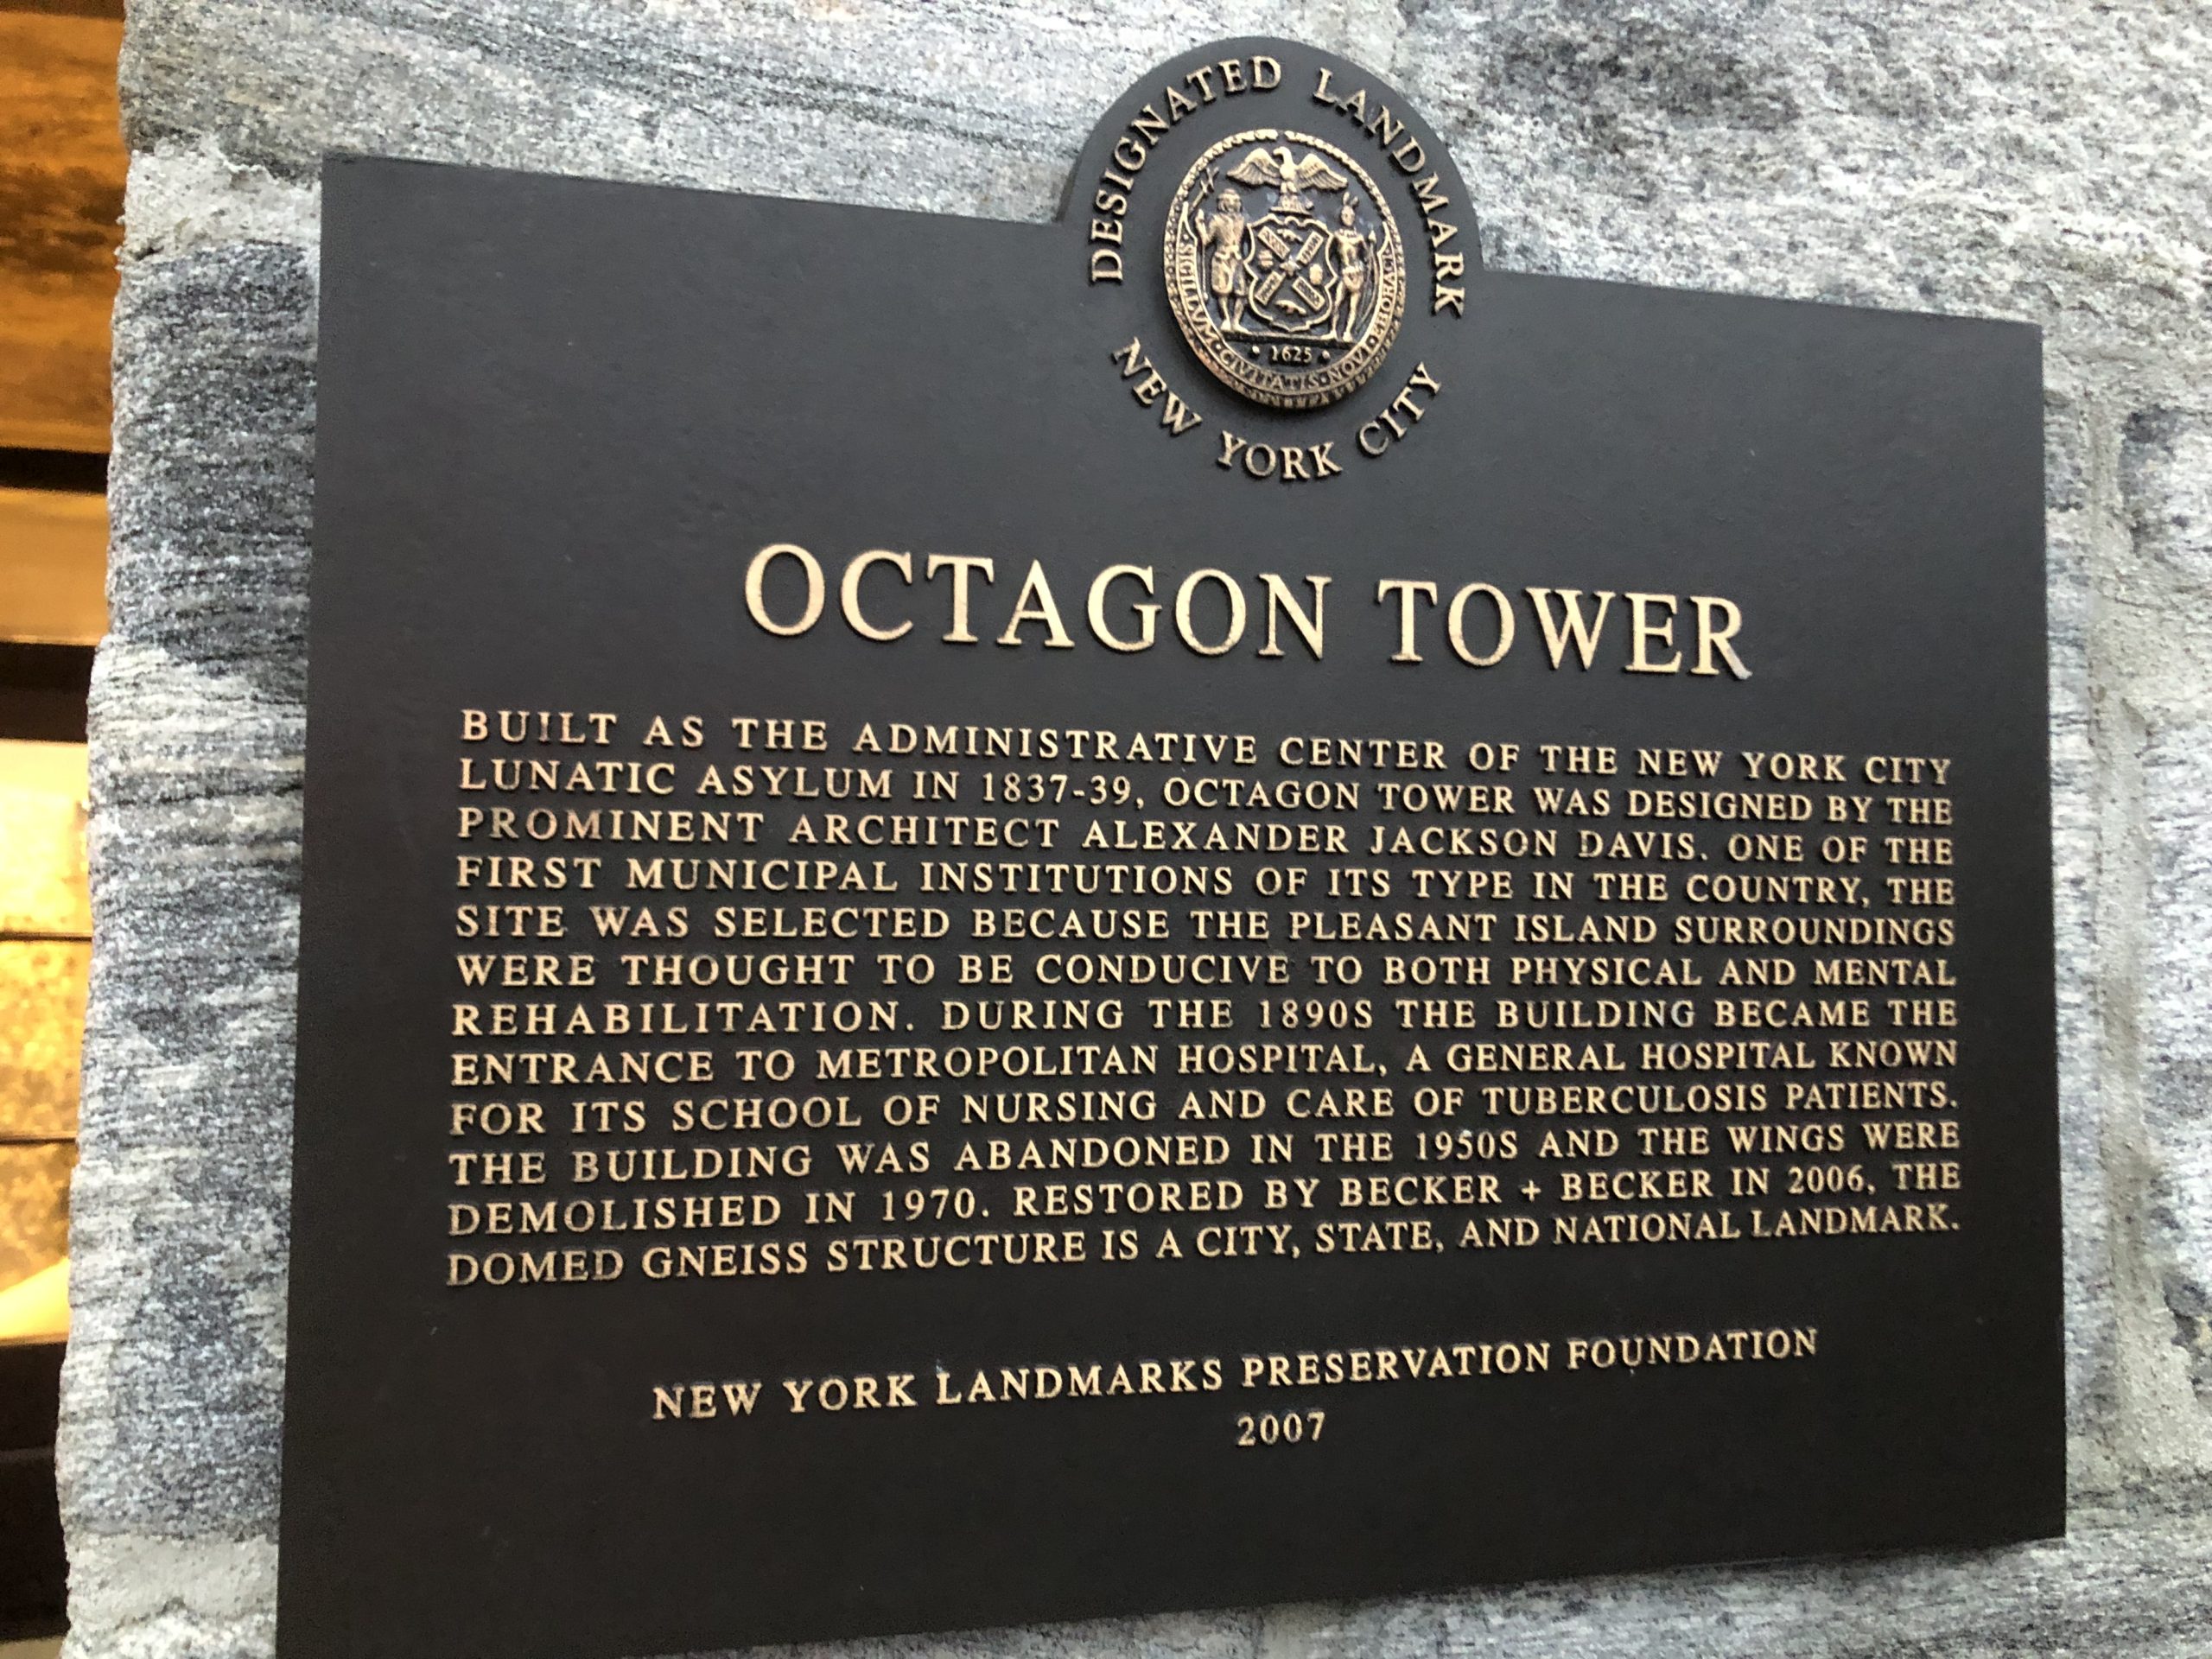 Octagon Tower on Roosevelt Island, NY